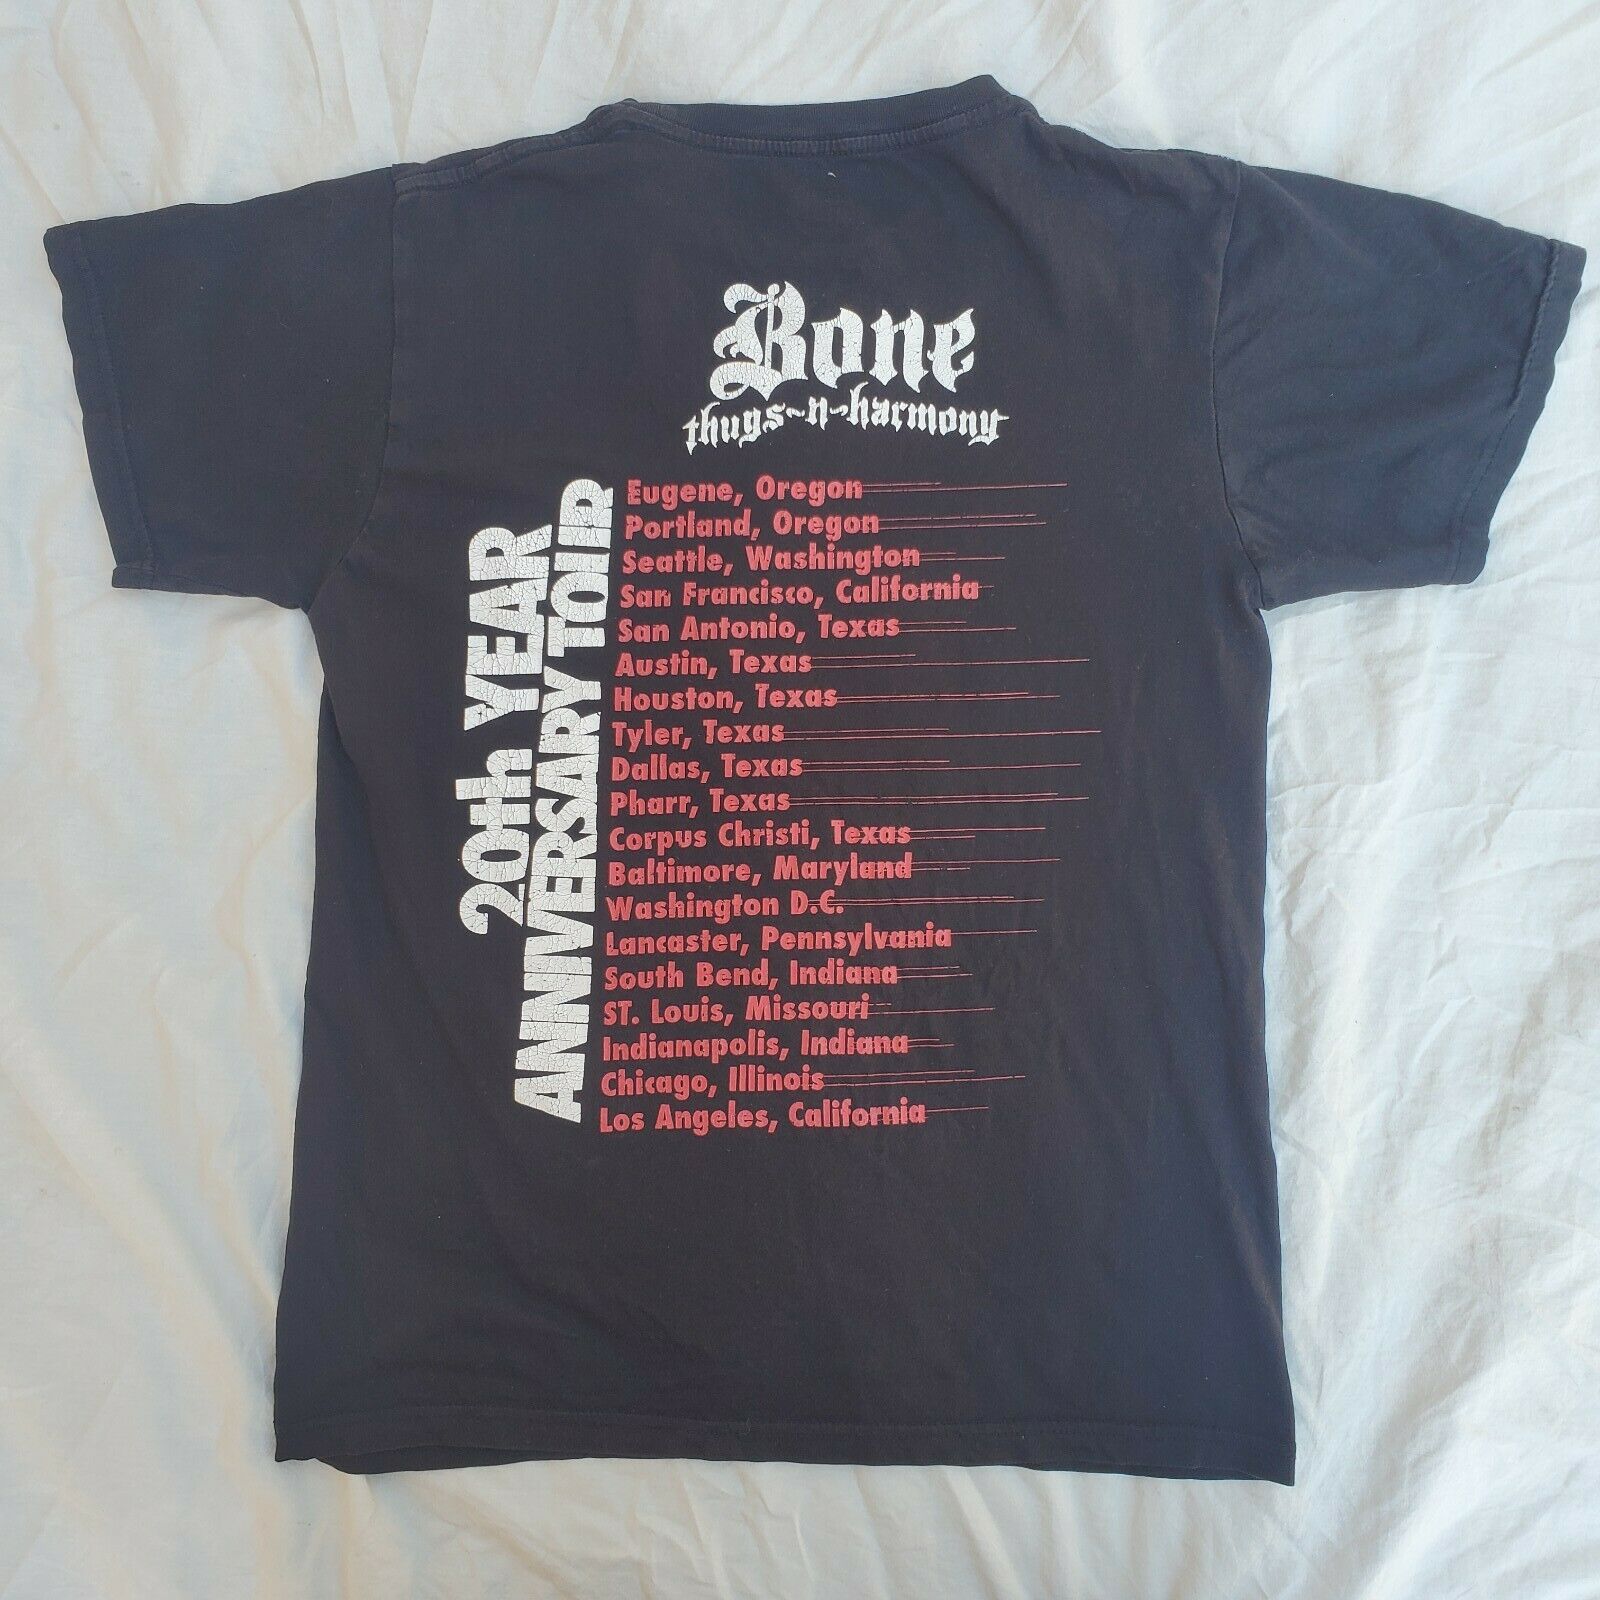 Bone Thugs-n-harmony 20th Anniversary Tour T Shirt The Life Apparel  Black Sz S